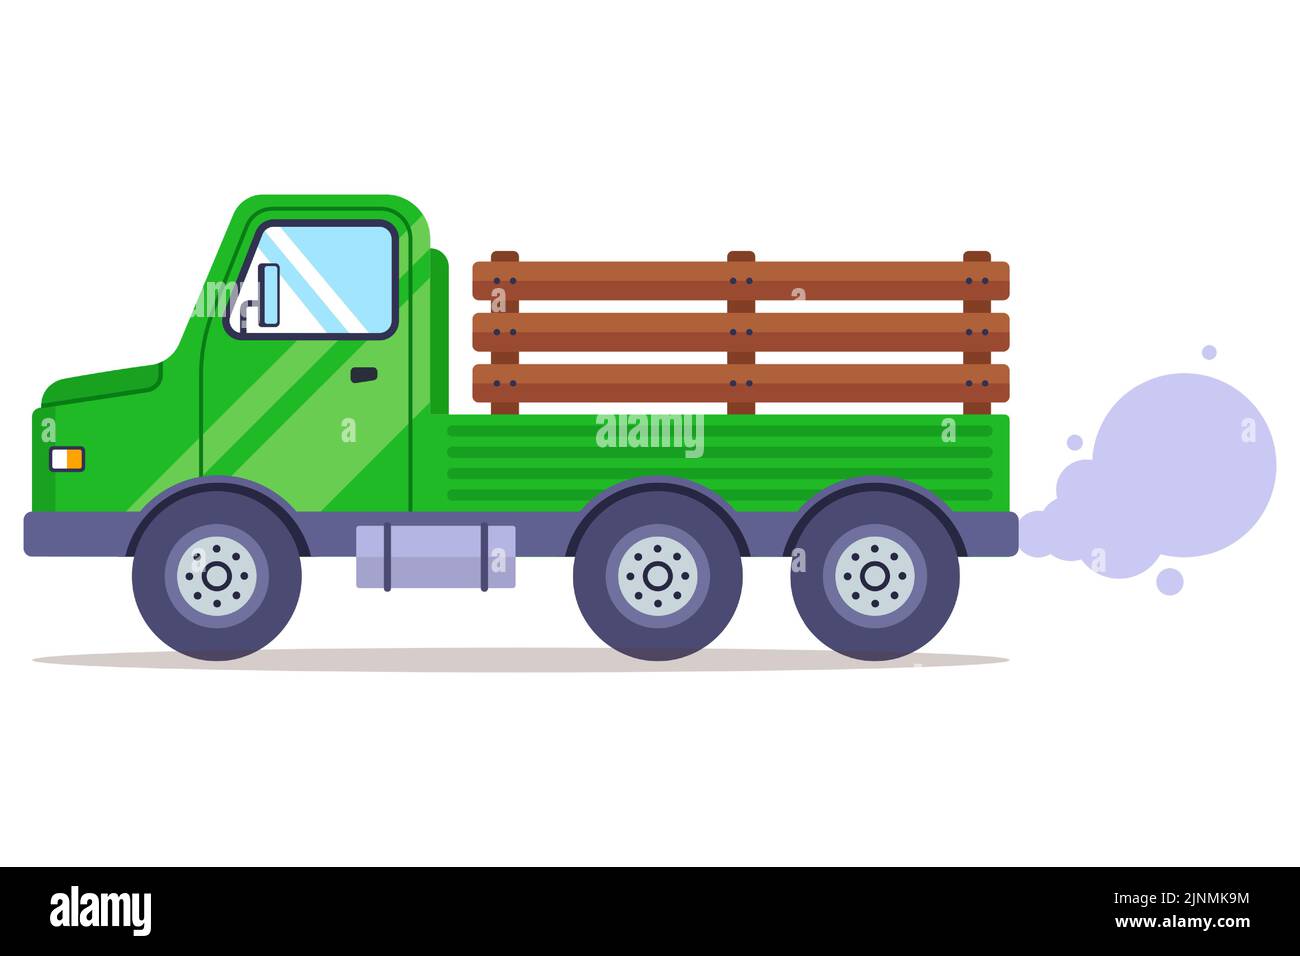 old green truck 50s in america. retro car for transportation of goods. flat vector illustration. Stock Vector